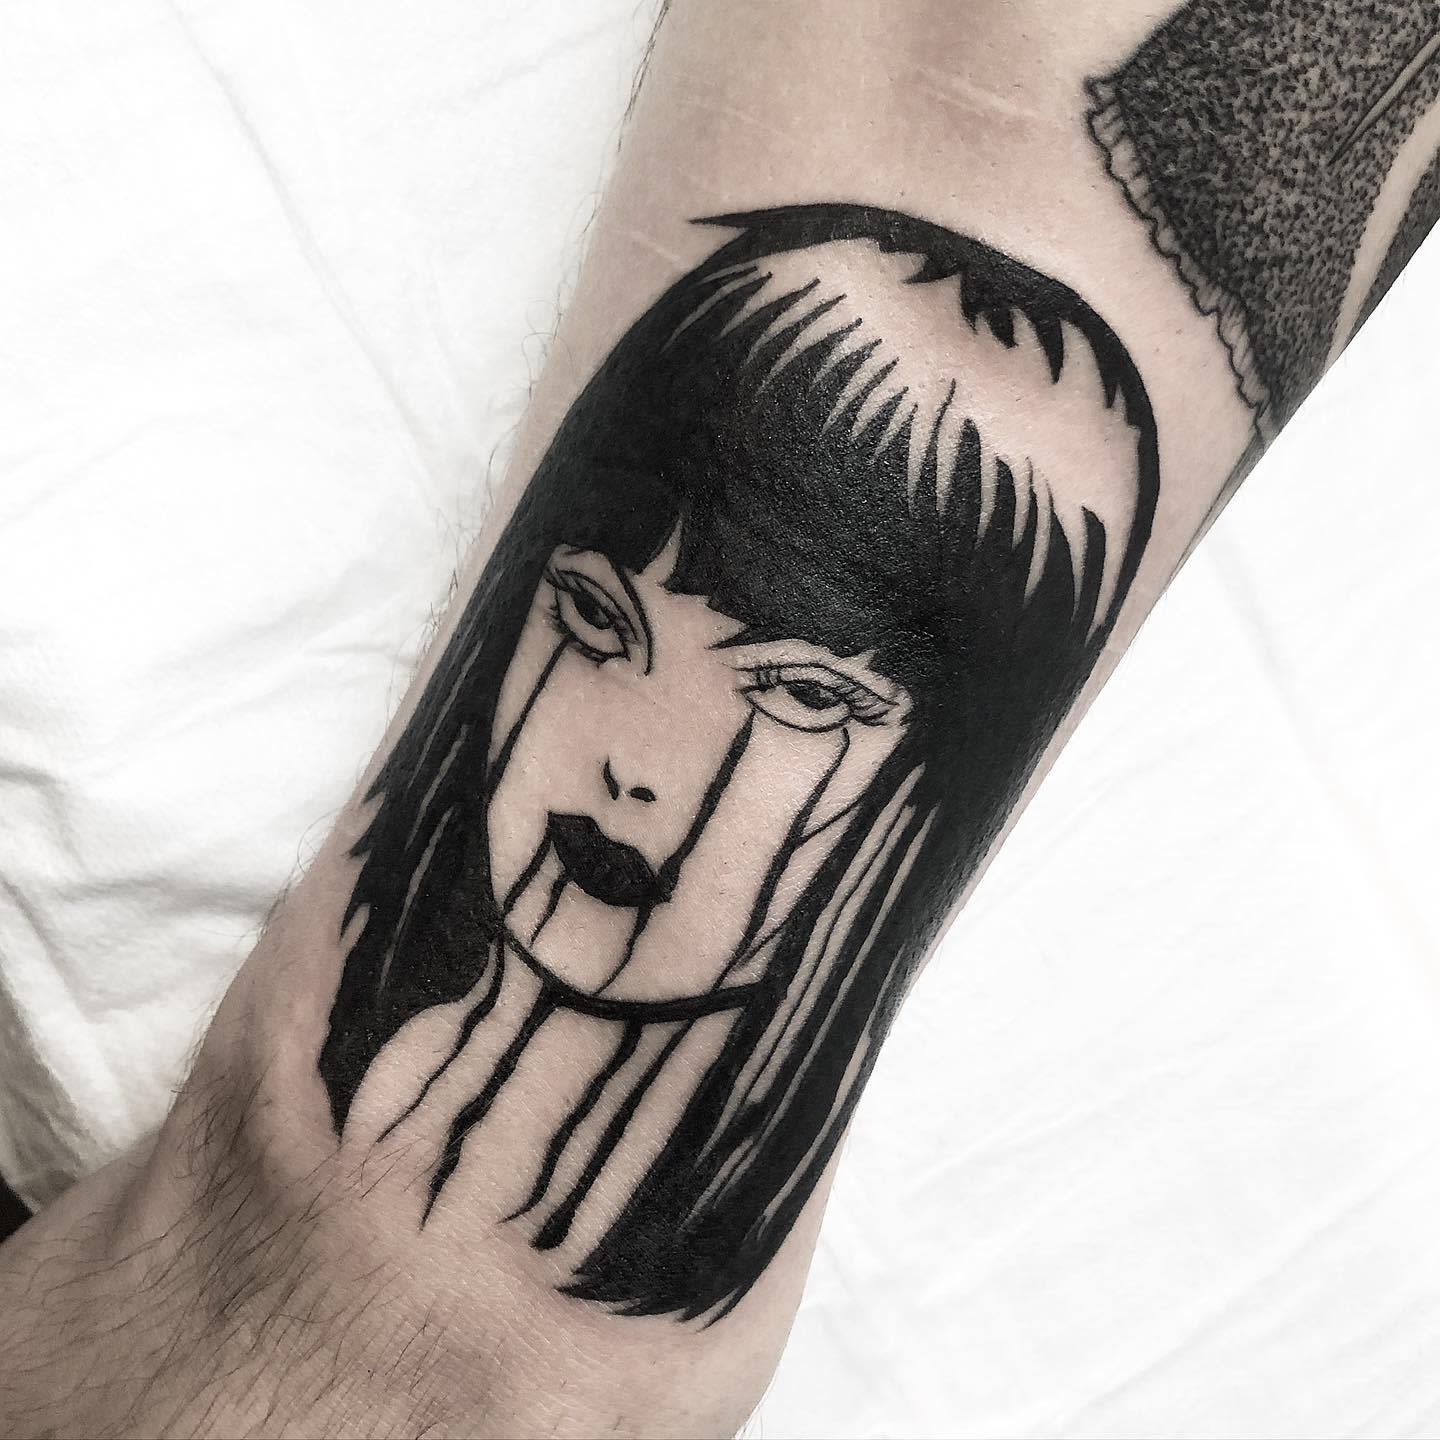 Tatuaje en el brazo de Junji Ito -jameswildtattoo